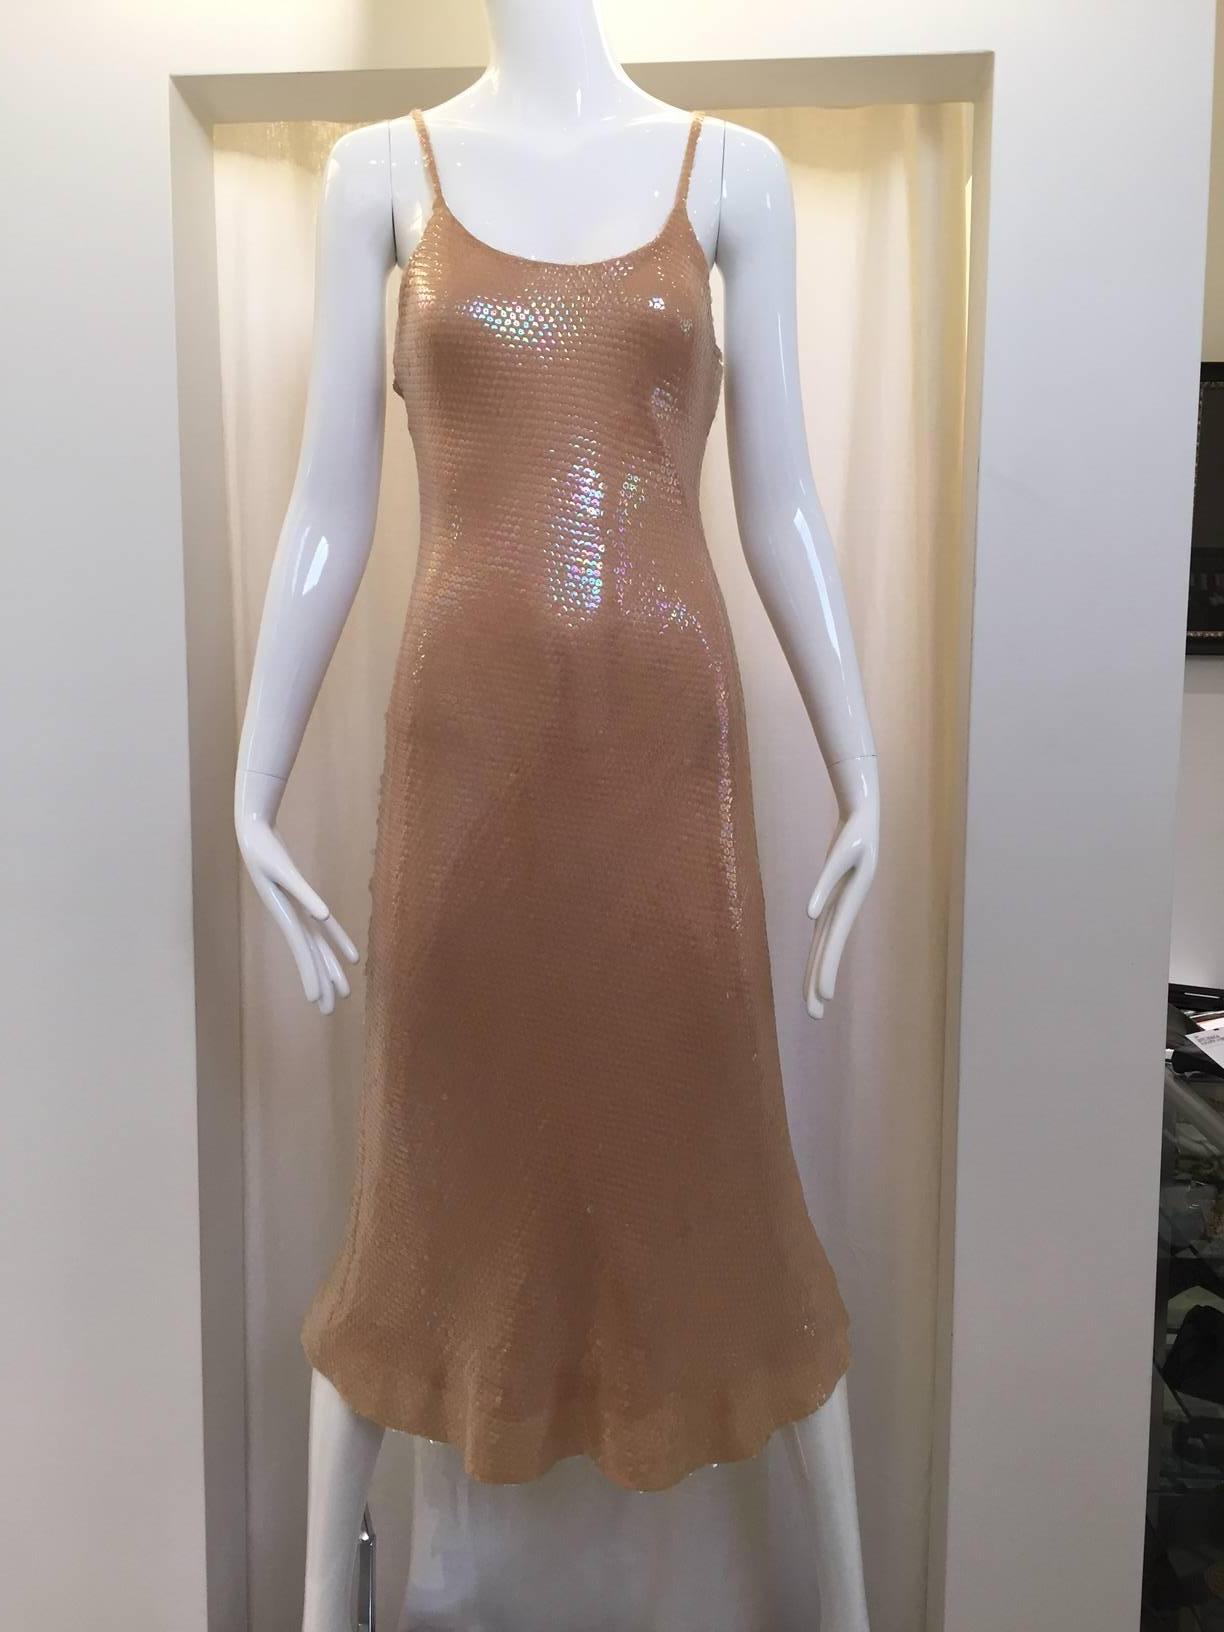 1970s HALSTON blush or pale pink sequin slip dress. 
Size: 2
B: 32
W:27
H:34